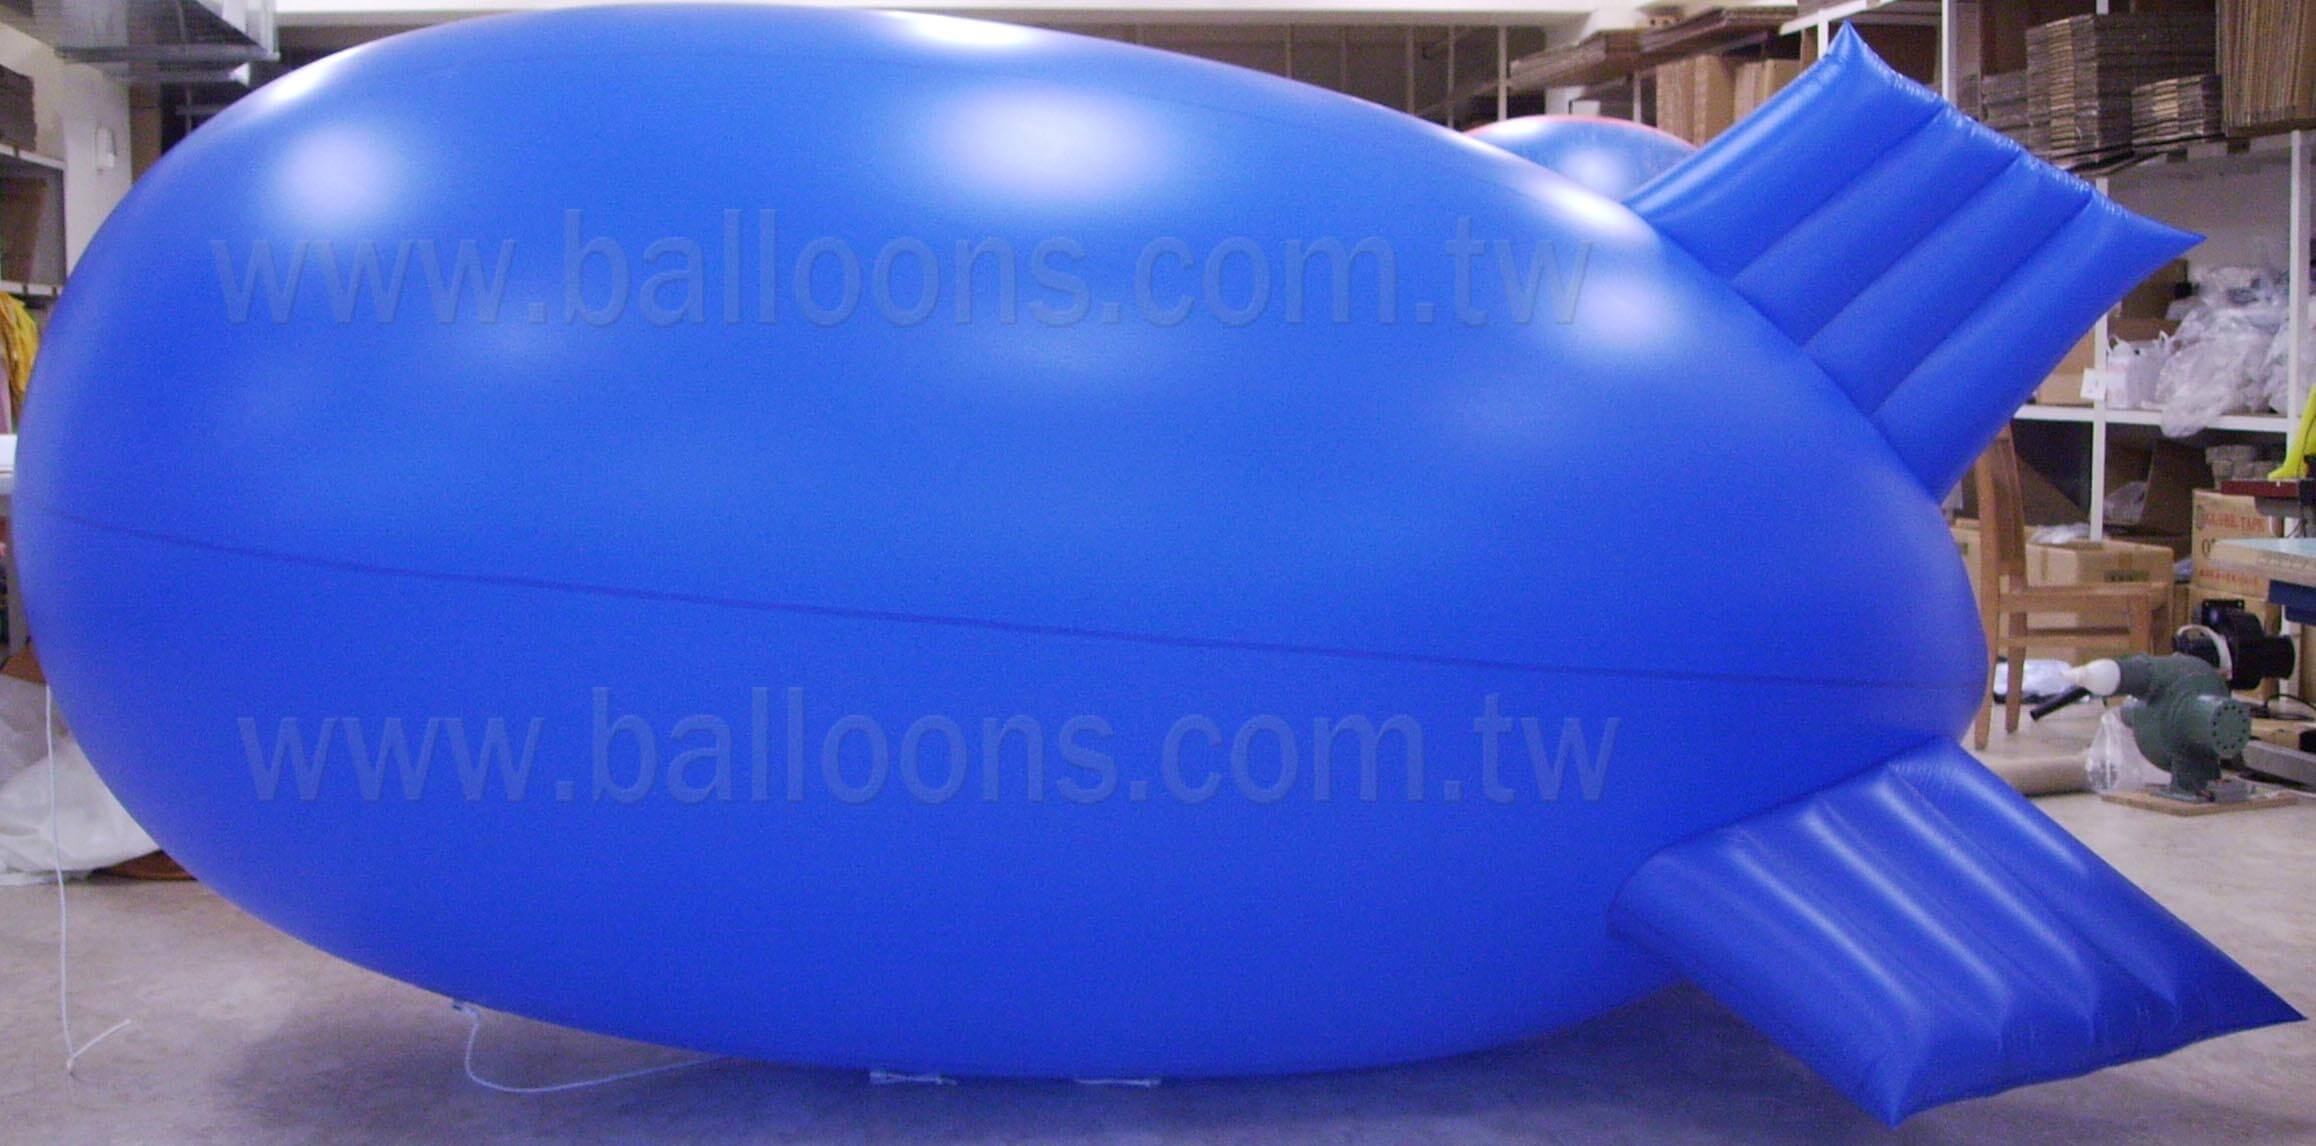 10ft long standard shape of inflatable fins blimp balloon翔奕標準形狀的軟翅飛船空飄氣球